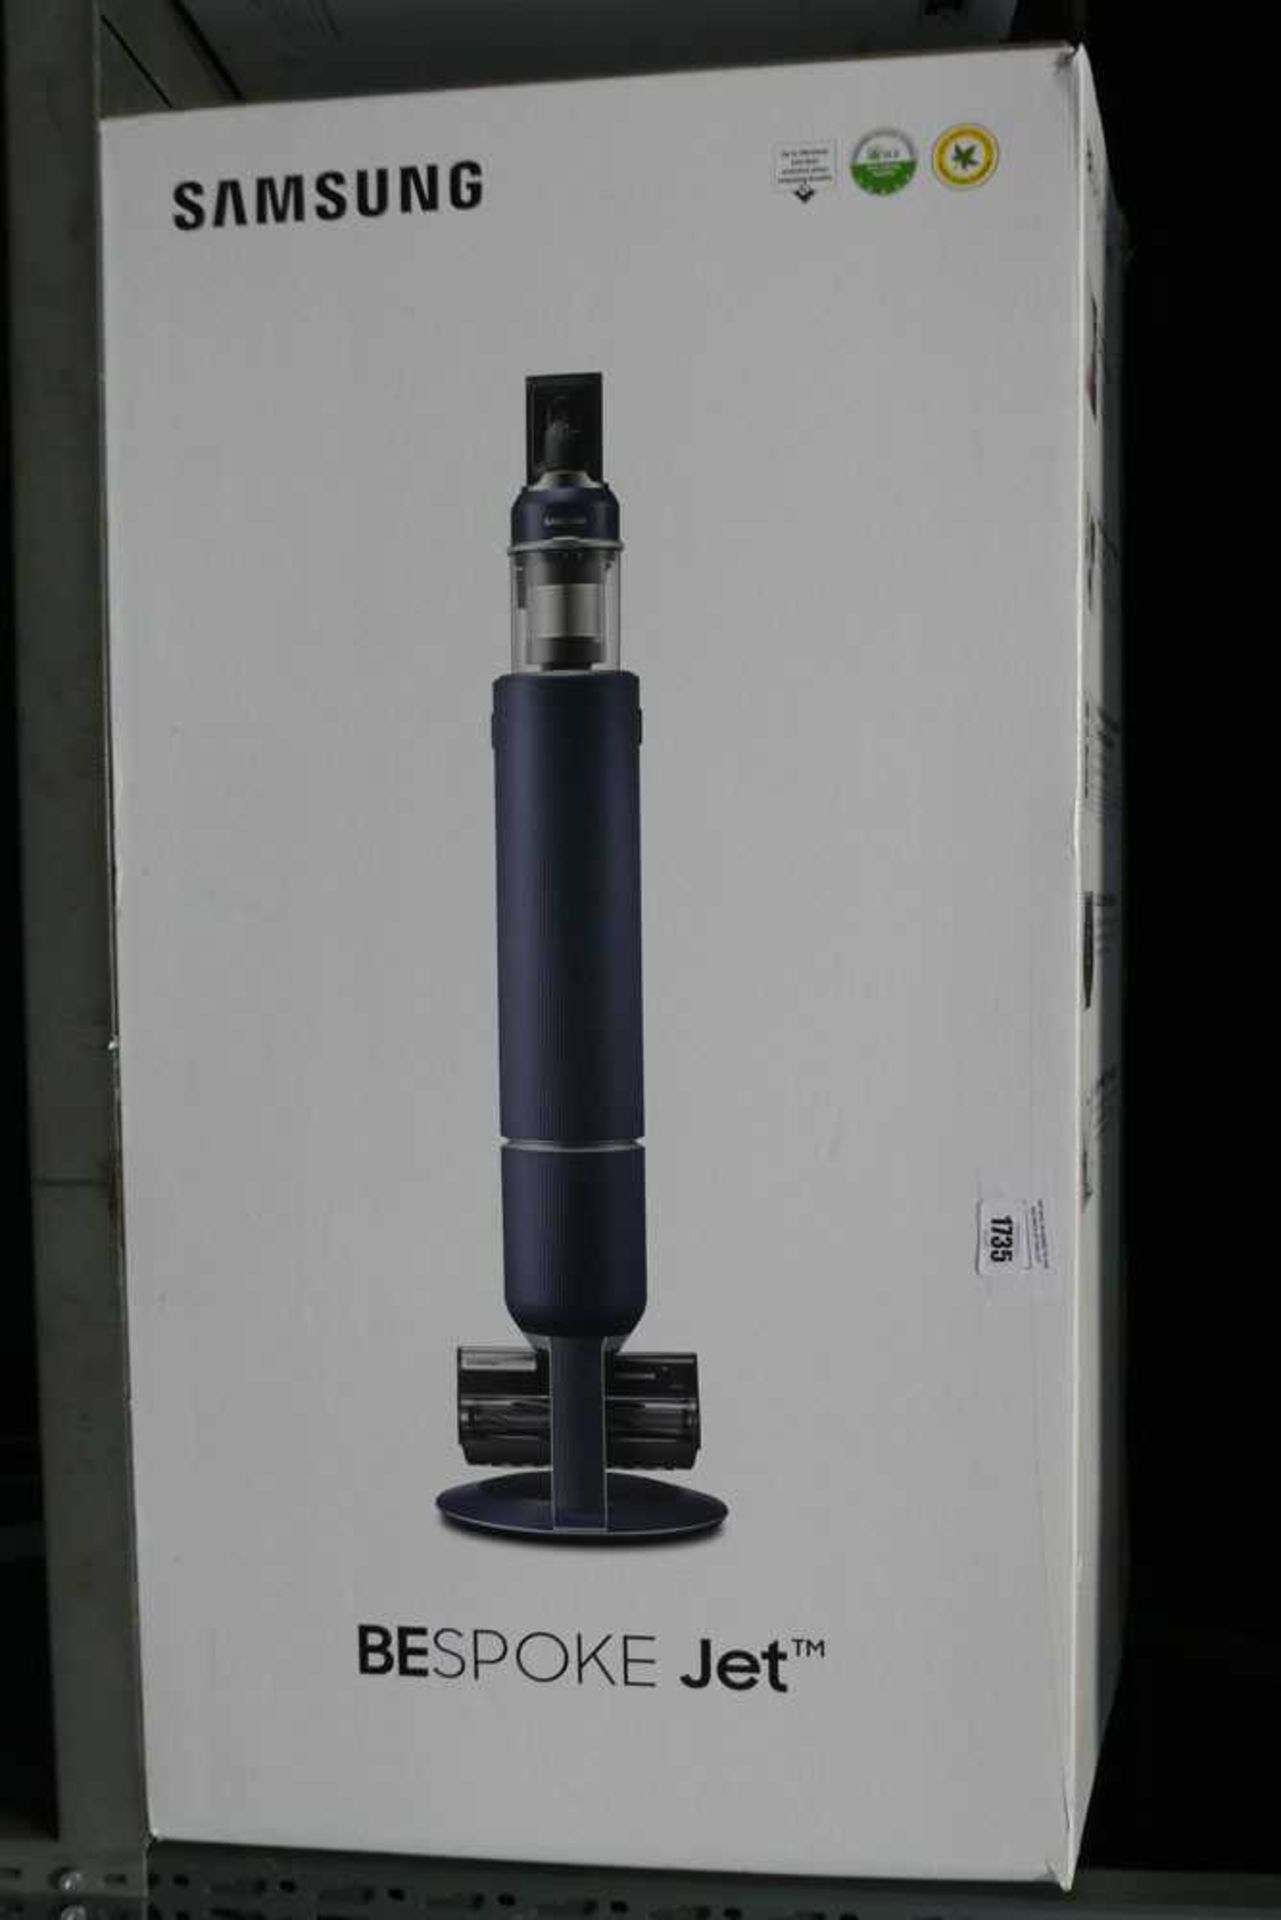 +VAT Samsung Bespoke jet wireless vacuum cleaner in box, no battery